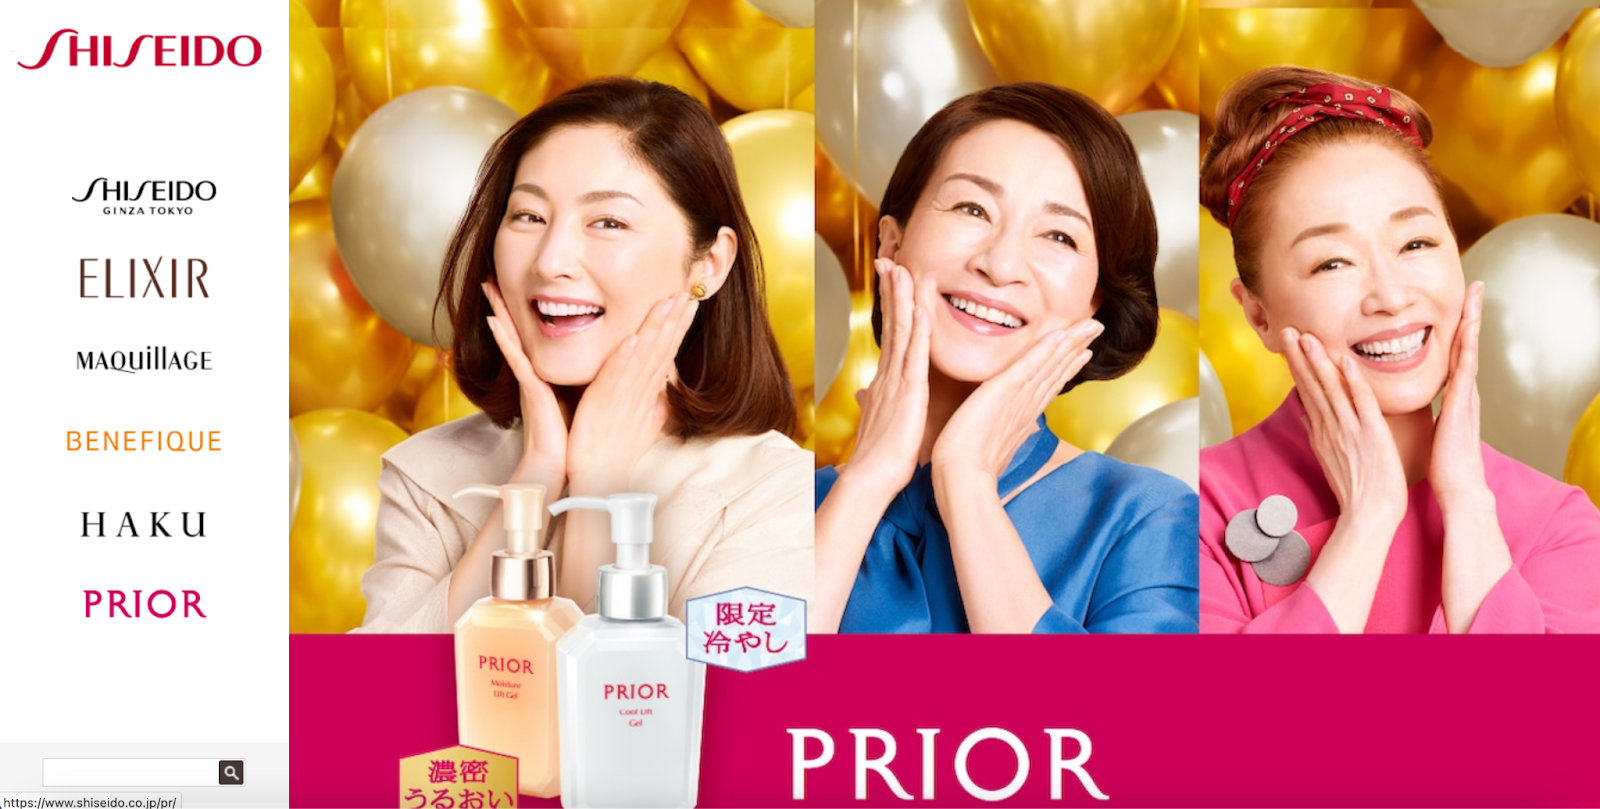 Japanese website homepage for Shiseido, the Japanese cosmetics company.